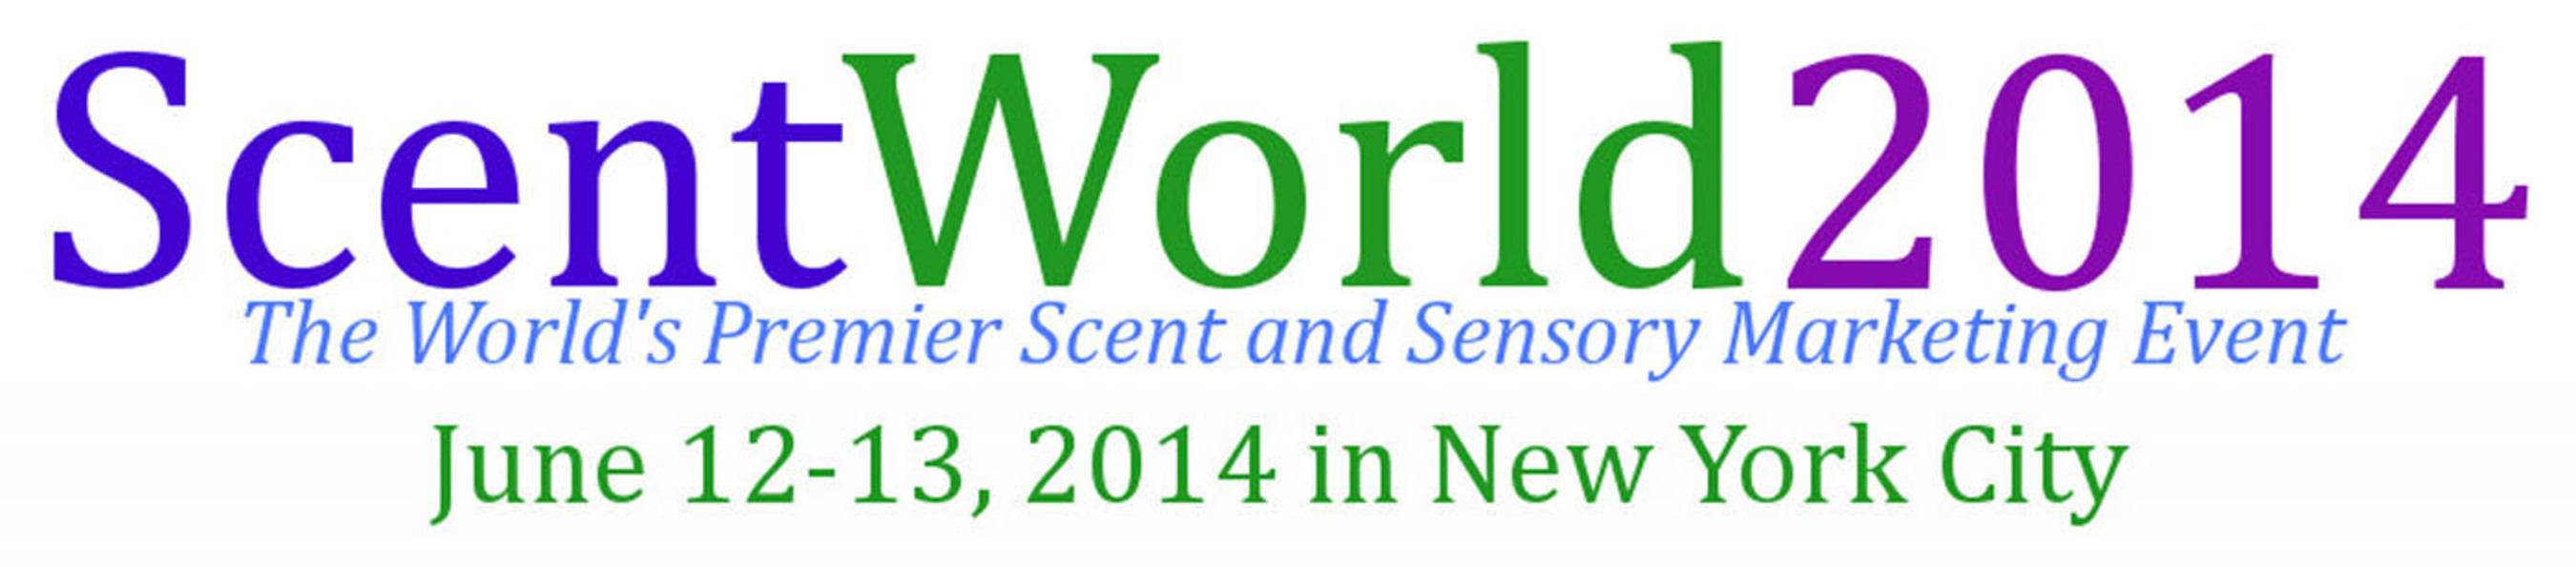 ScentWorld 2014 logo. (PRNewsFoto/Scent Marketing Institute) (PRNewsFoto/SCENT MARKETING INSTITUTE)